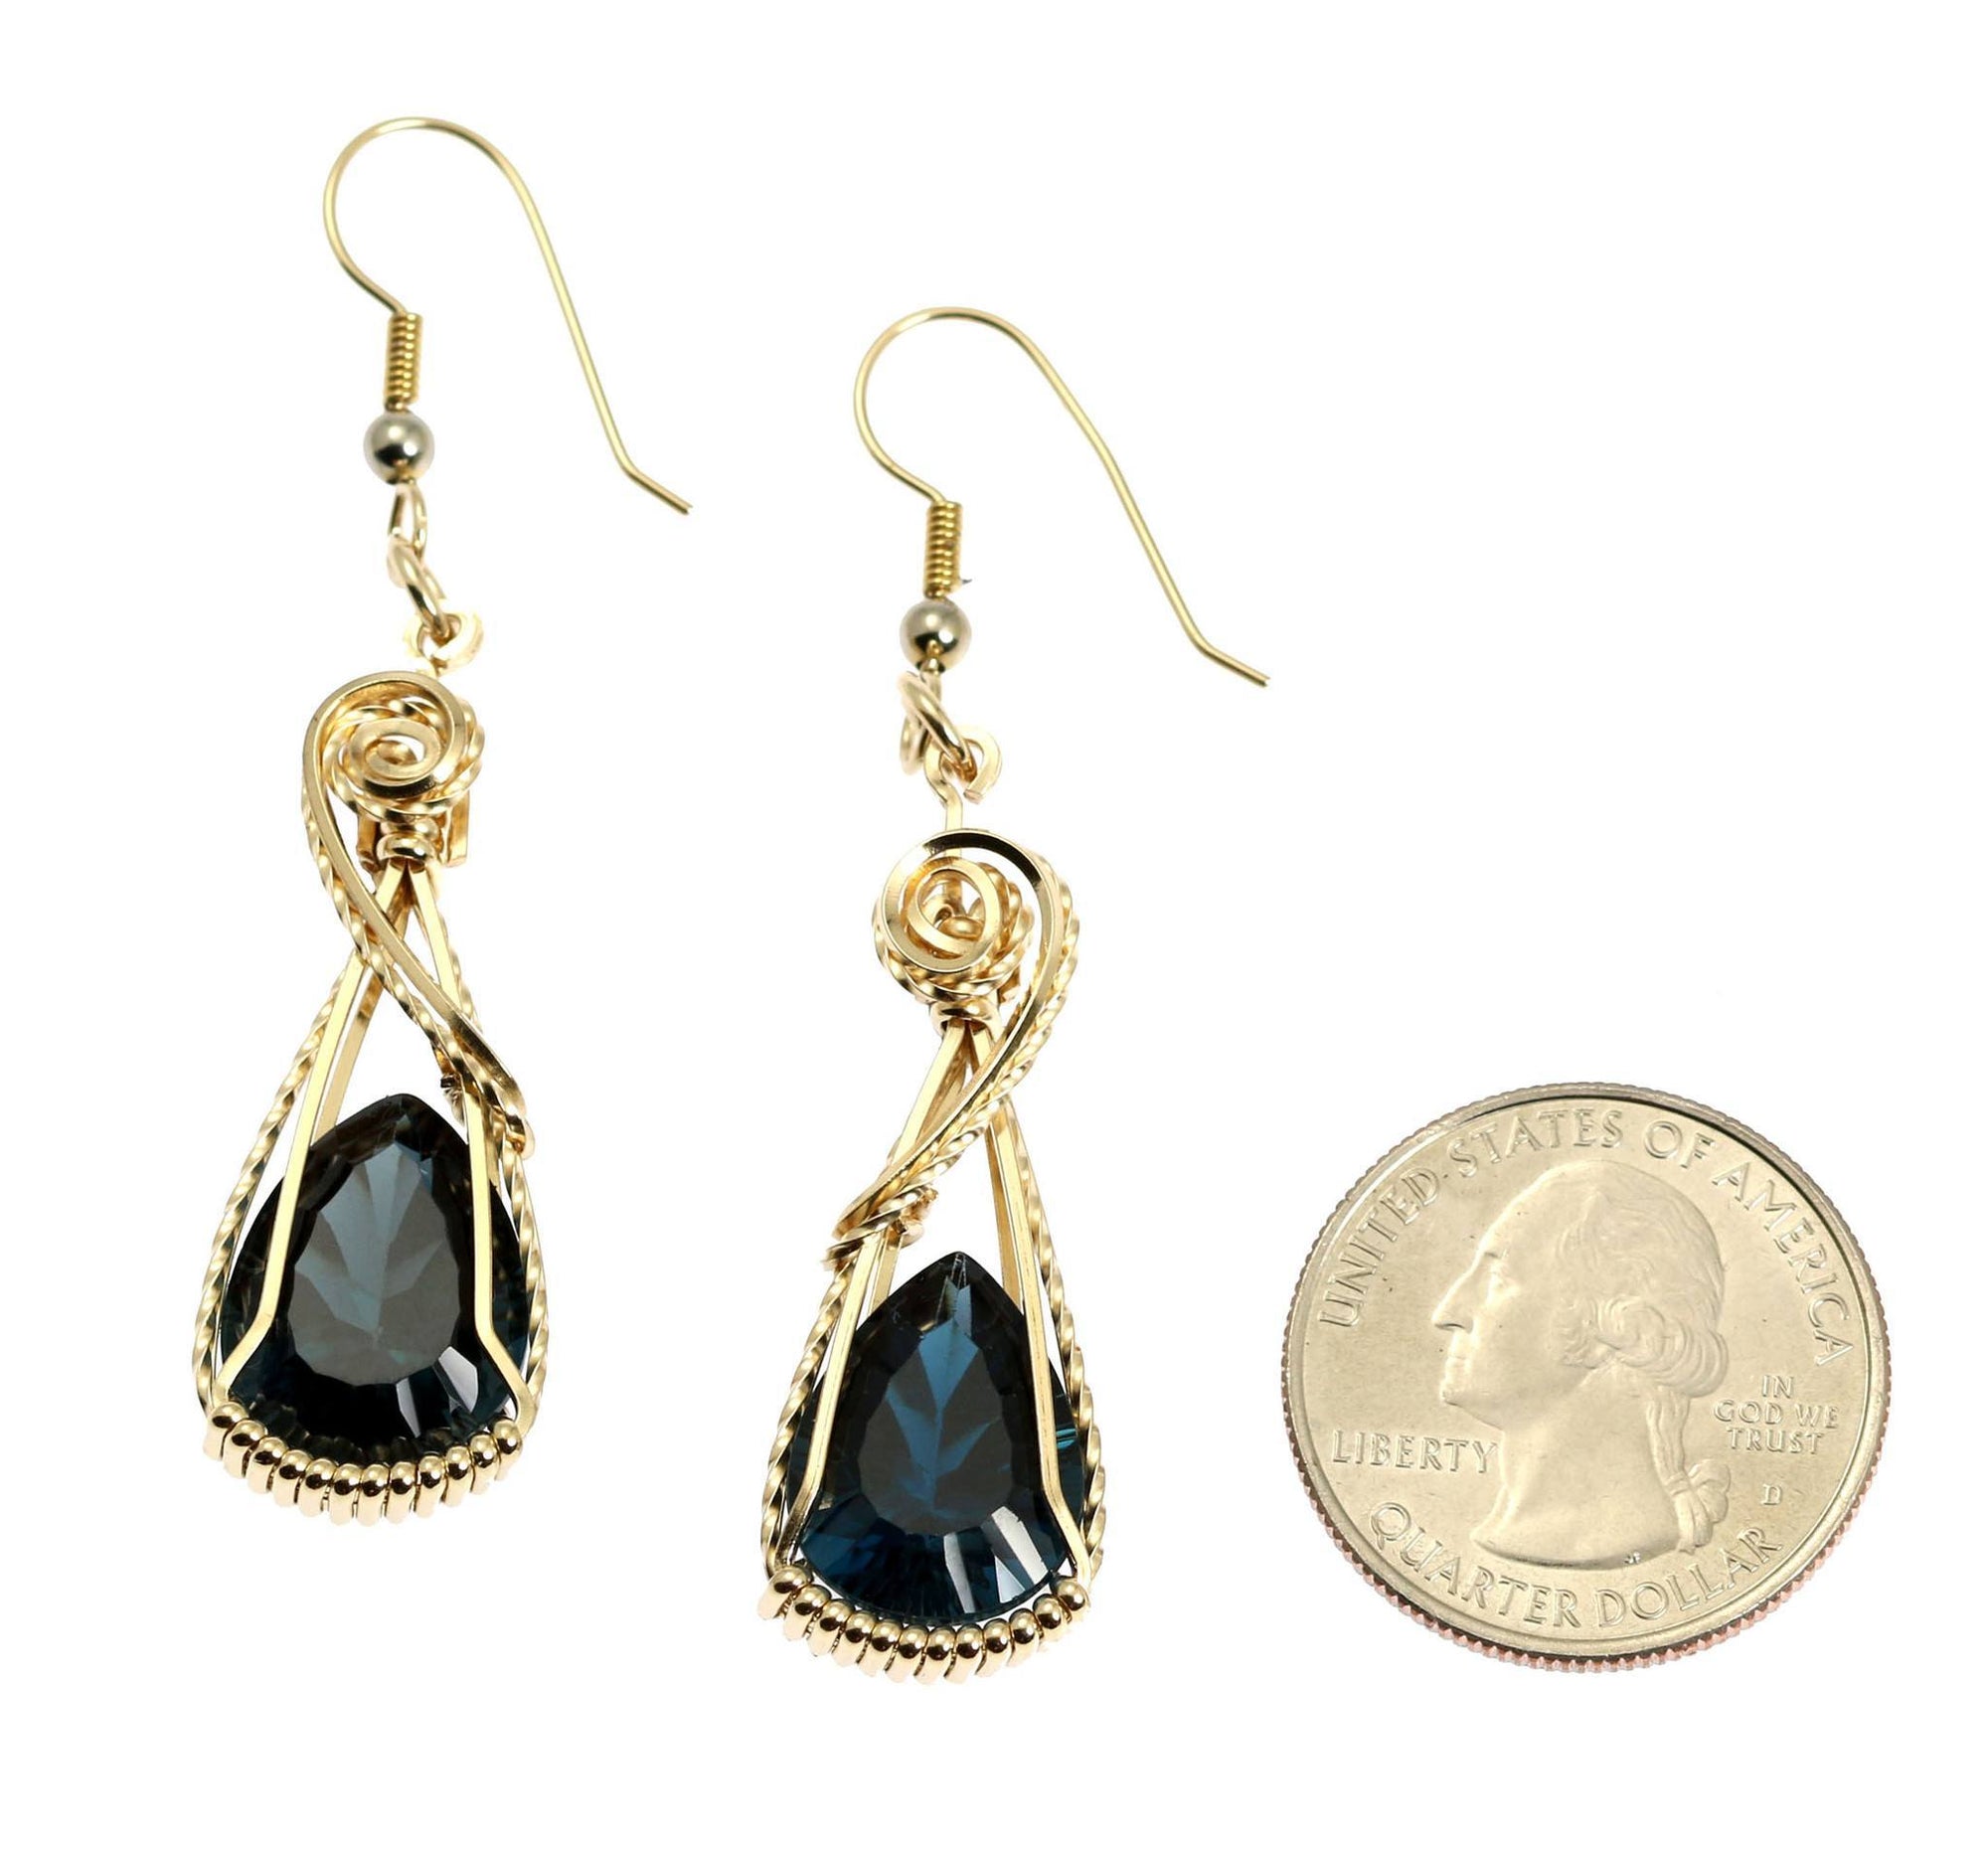 Size of London Blue Topaz 14K Gold-filled Earrings